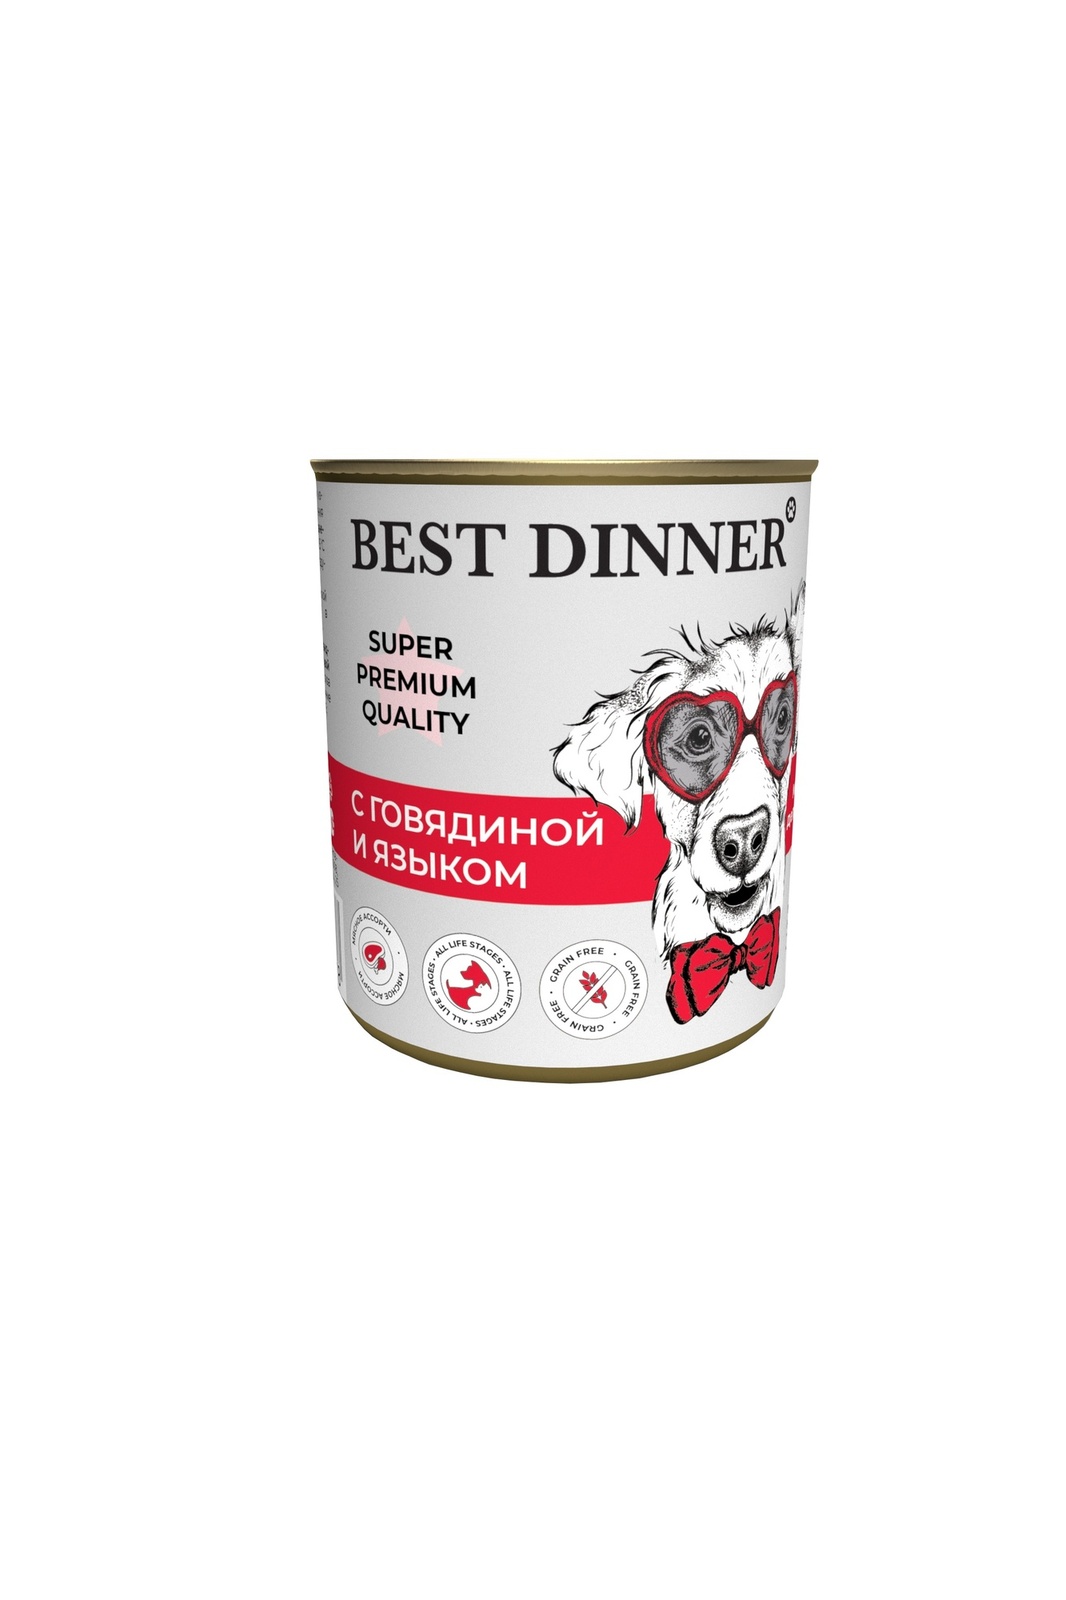 Best Dinner Best Dinner консервы для собак Super Premium С говядиной и языком (340 г) best dinner best dinner консервы premium меню 3 с говядиной и кроликом 340 г